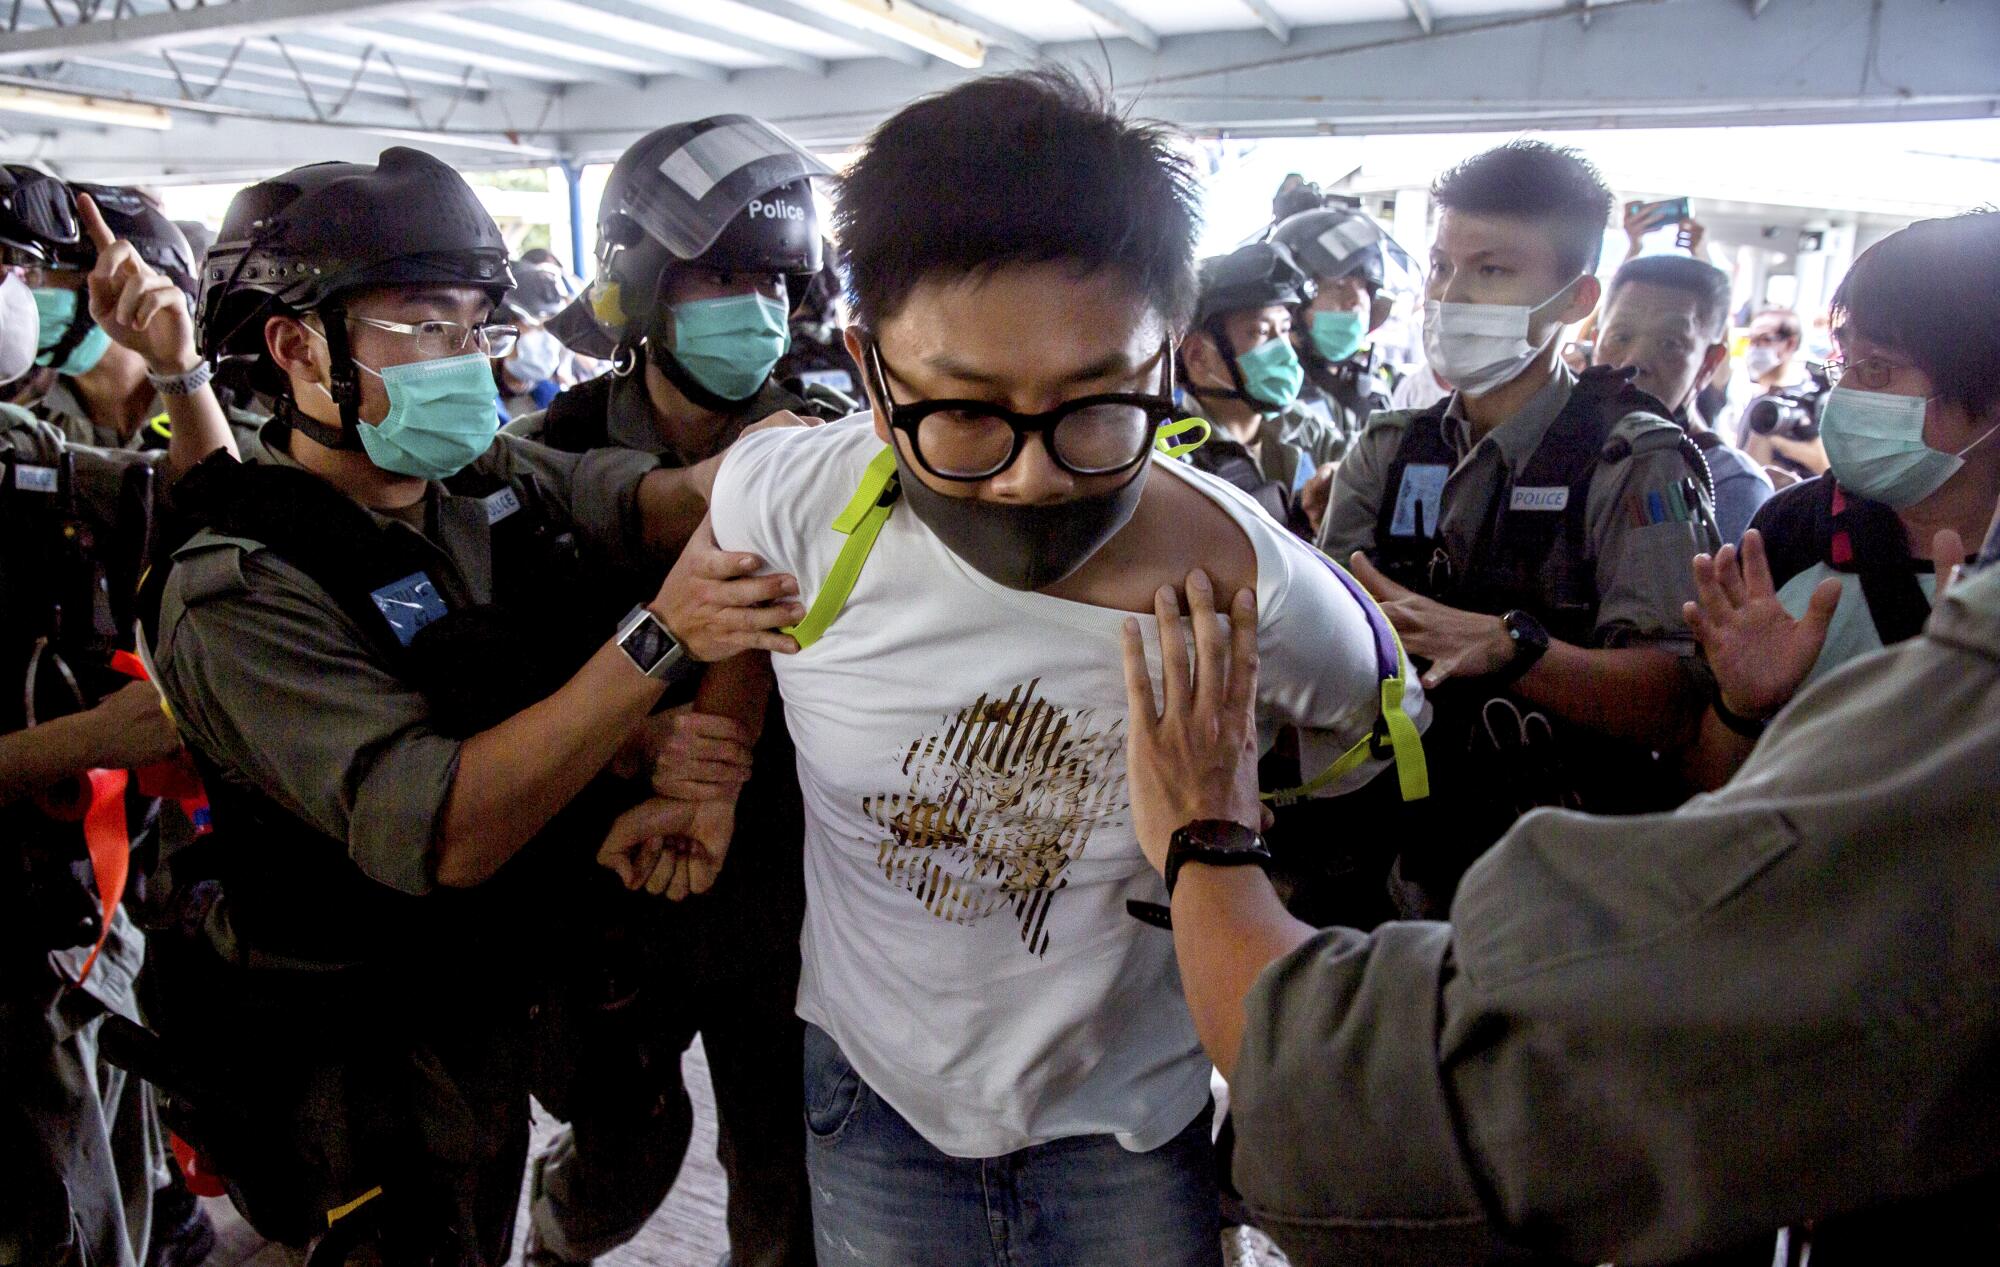 Police officers arrest a demonstrator in Hong Kong.